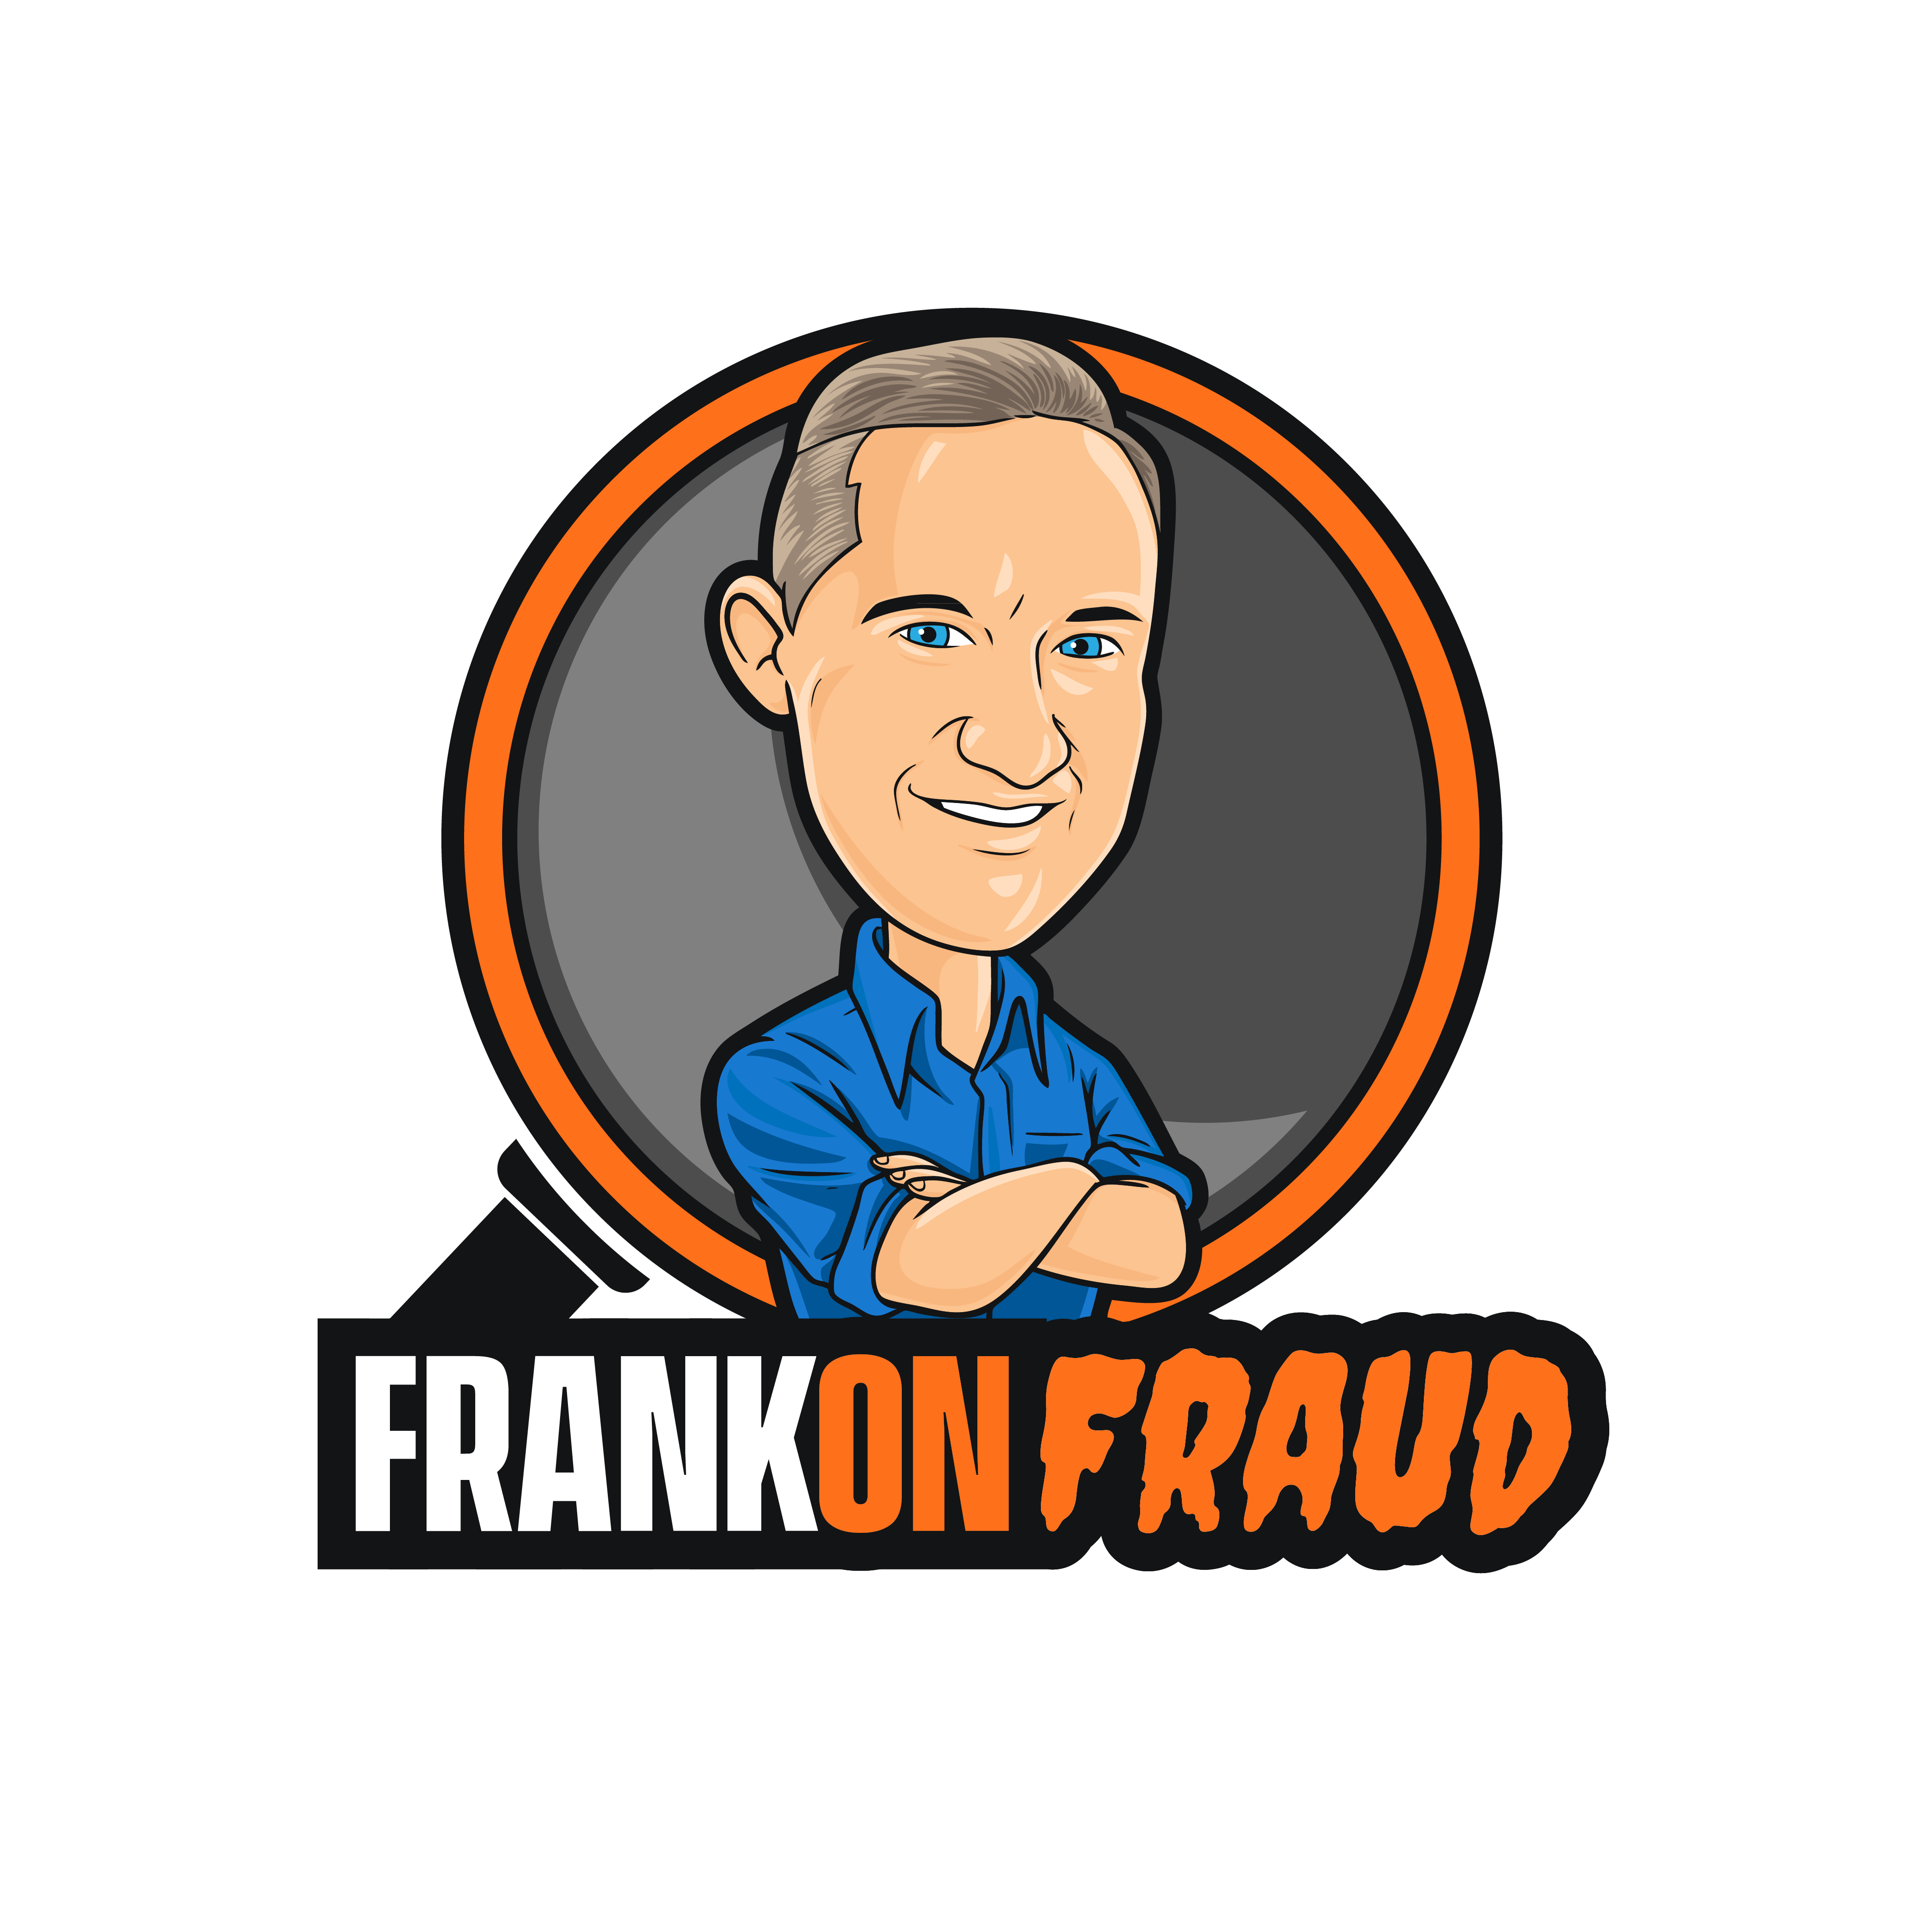 Frank on Fraud